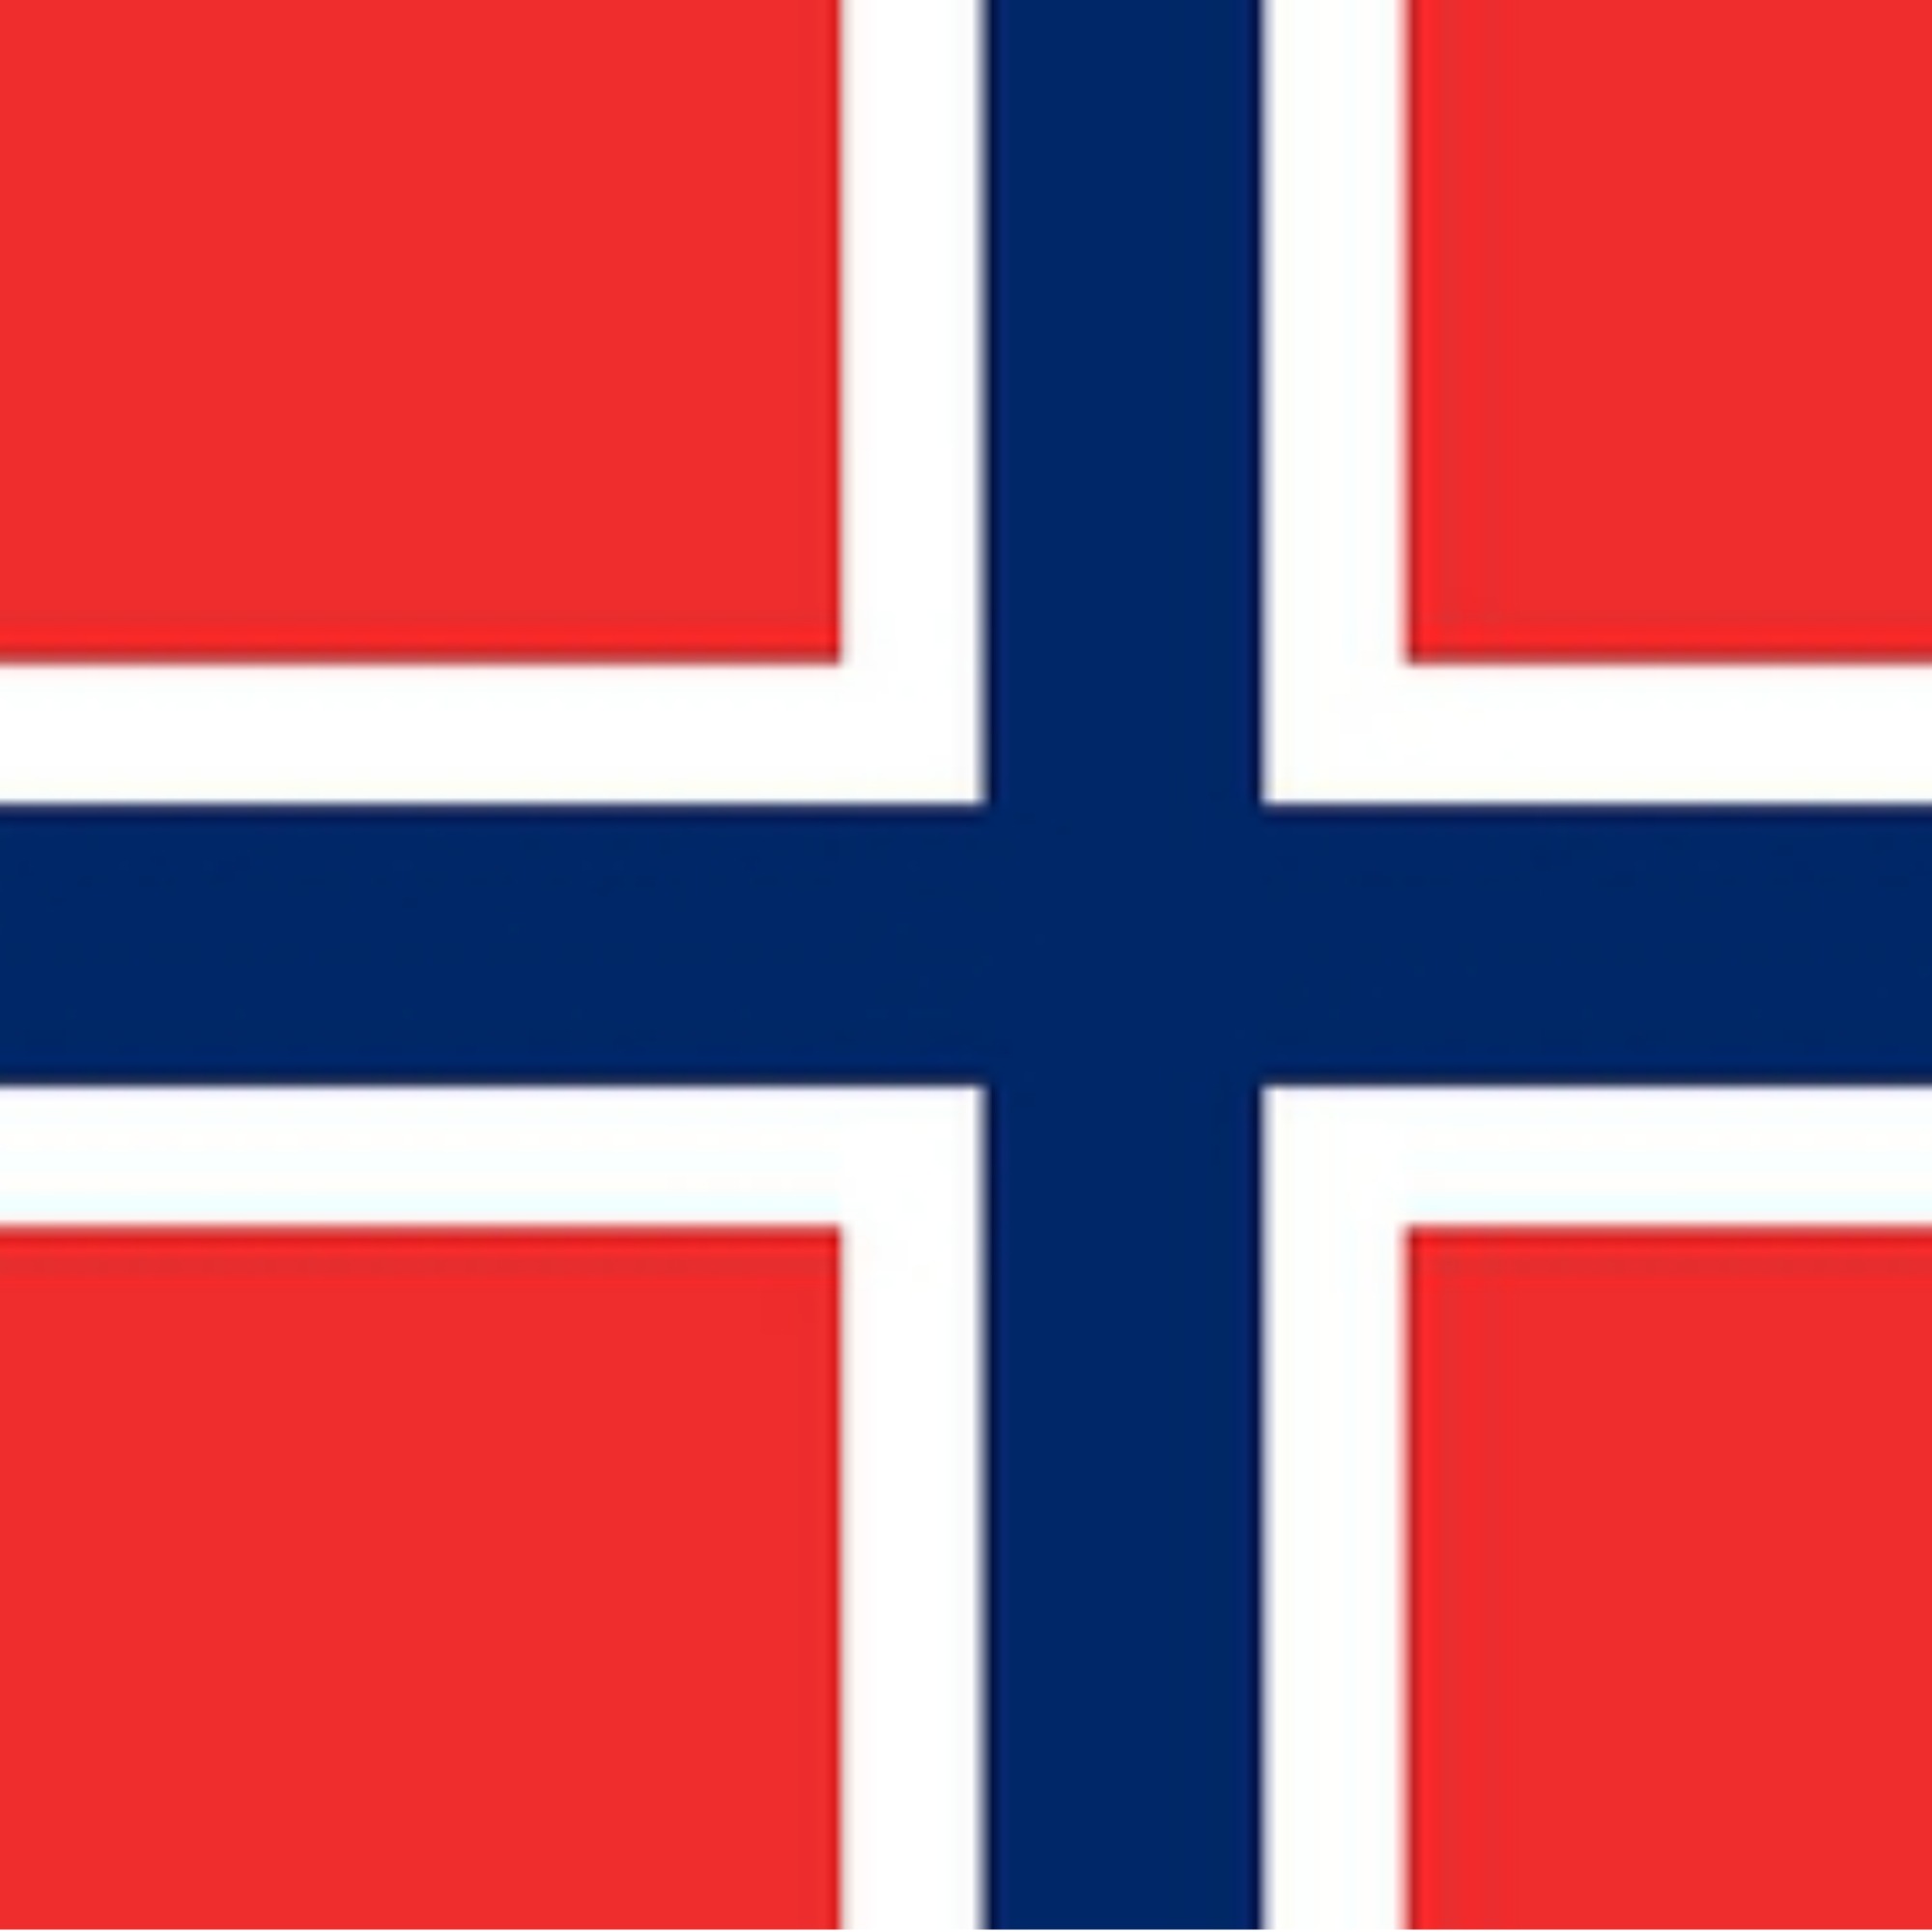 Consulat Honorari de Noruega (Torrevella)